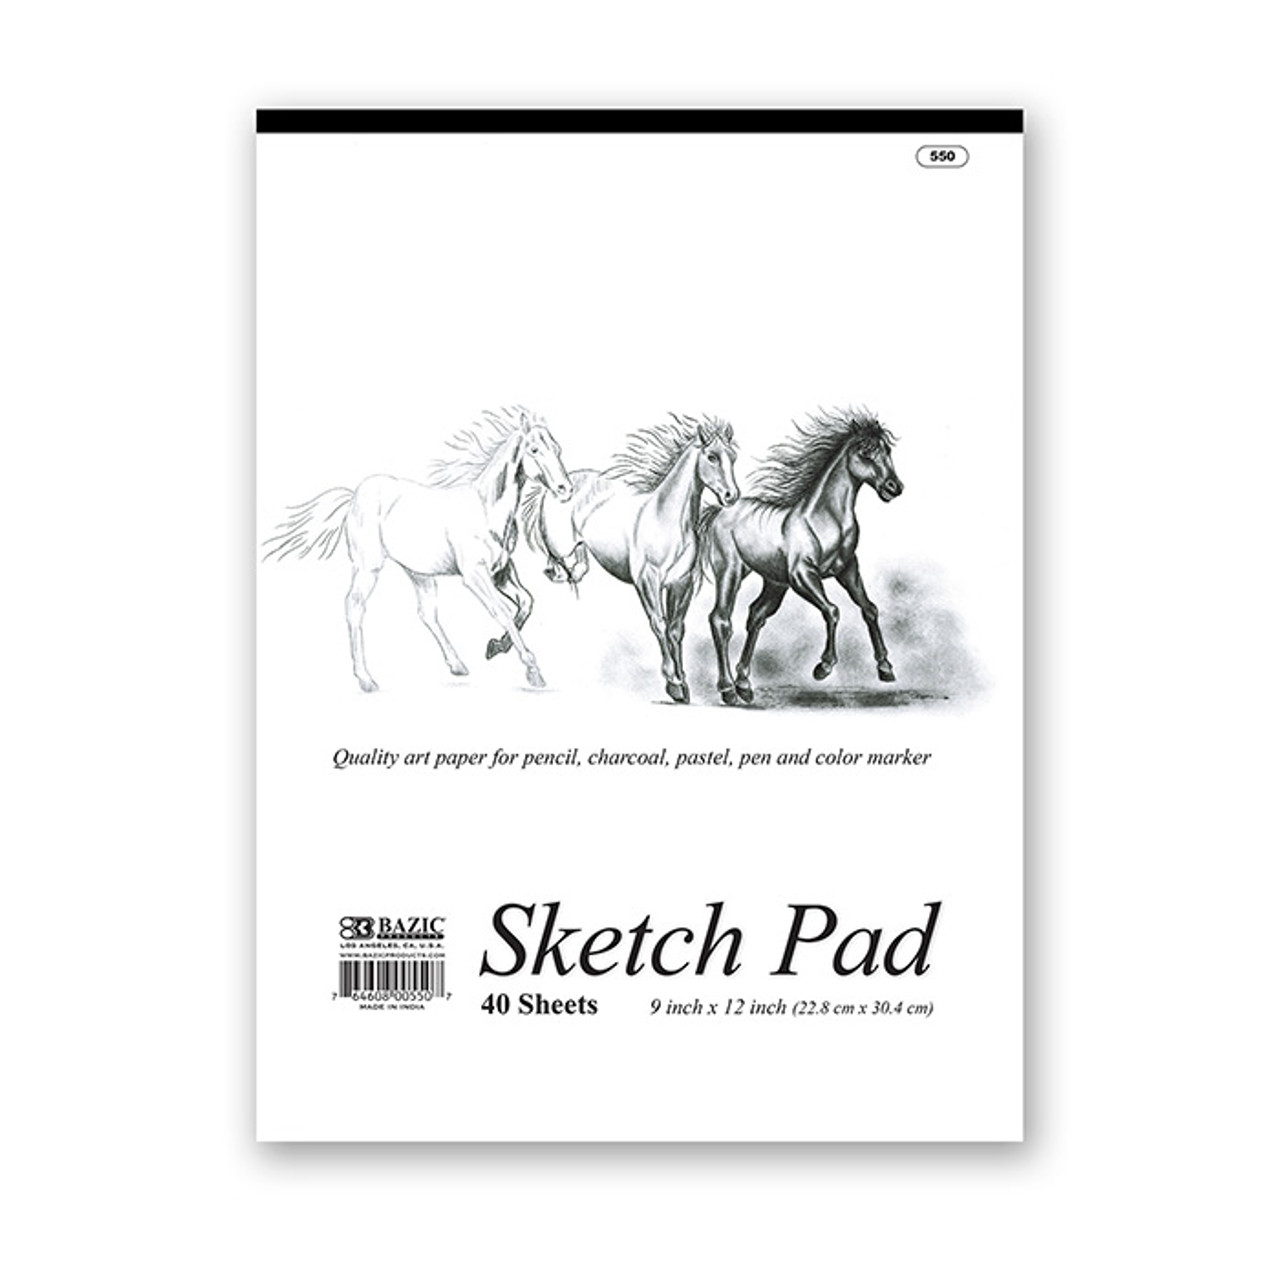 Bulk Sketch Pads, 9x12 at DollarTree.com